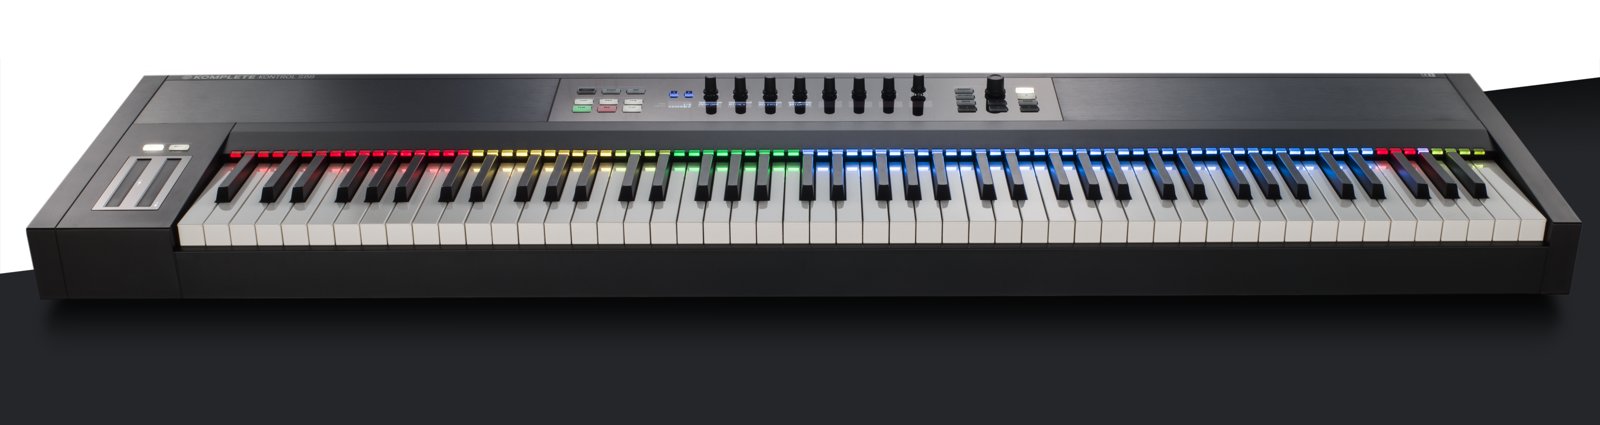 Native Instruments Komplete Kontrol S88 Keyboard Controller - Keyboard Controller - Professional Audio Design, Inc